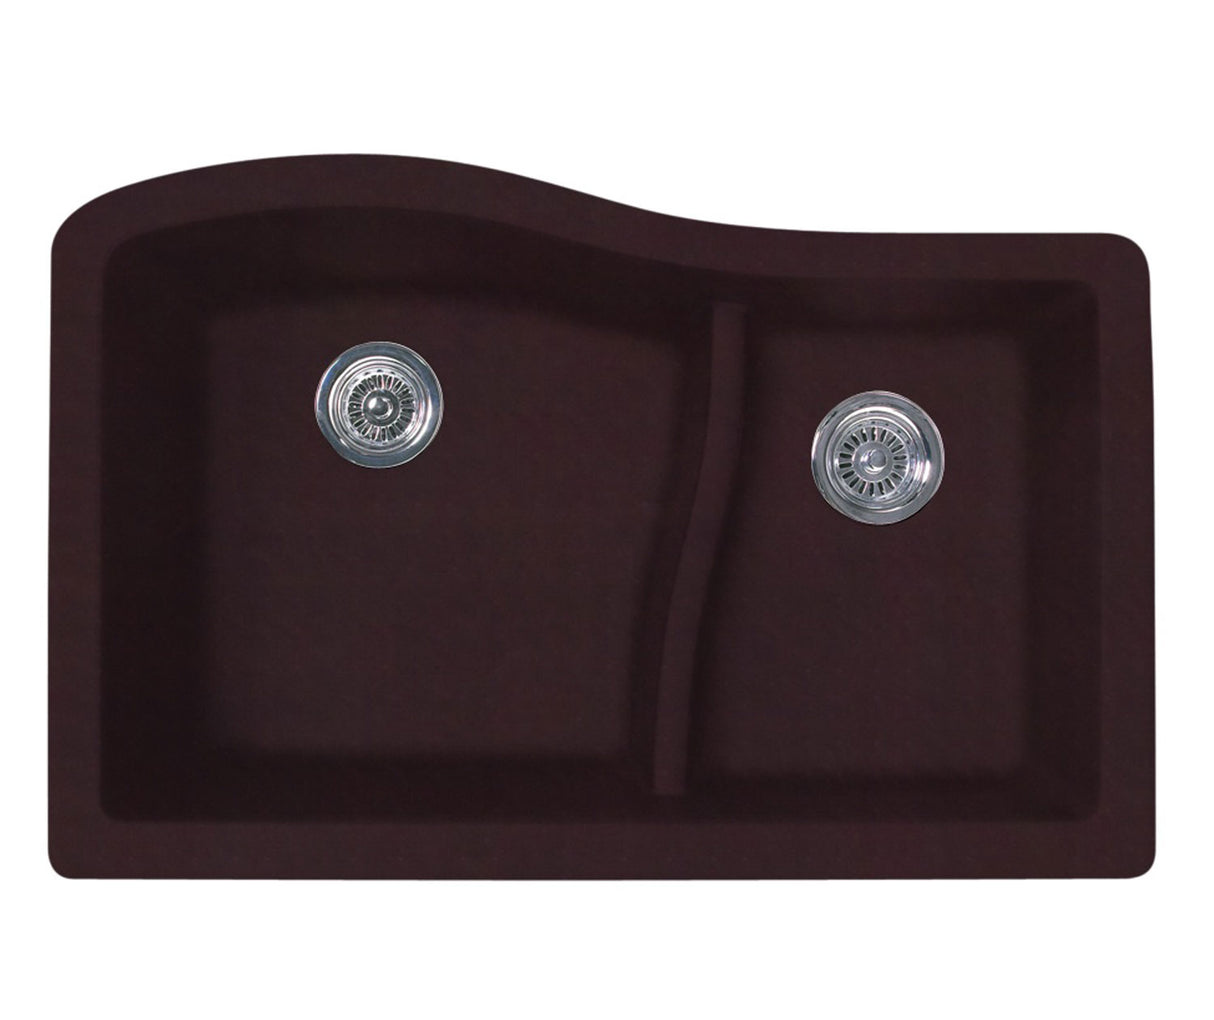 Swanstone QULS-3322 22 x 33 Granite Undermount Double Bowl Sink in Espresso QU03322LS.170